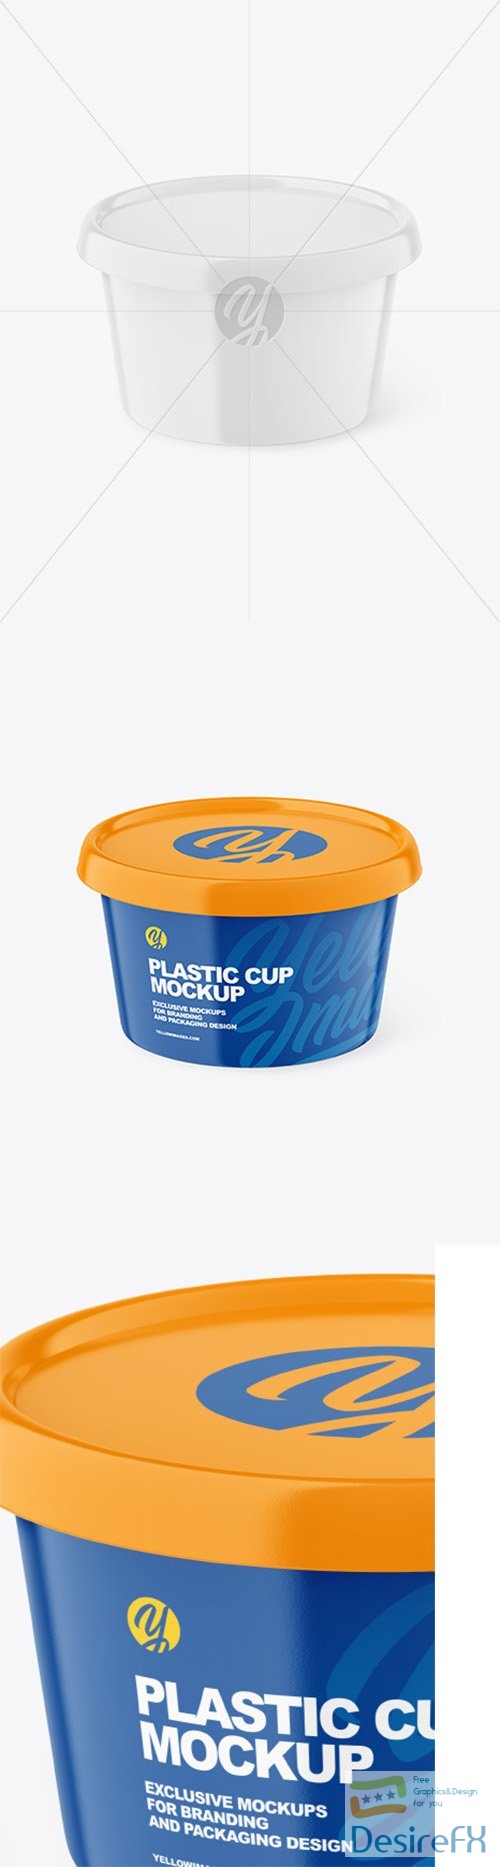 Glossy Plastic Cup Mockup 85580 TIF